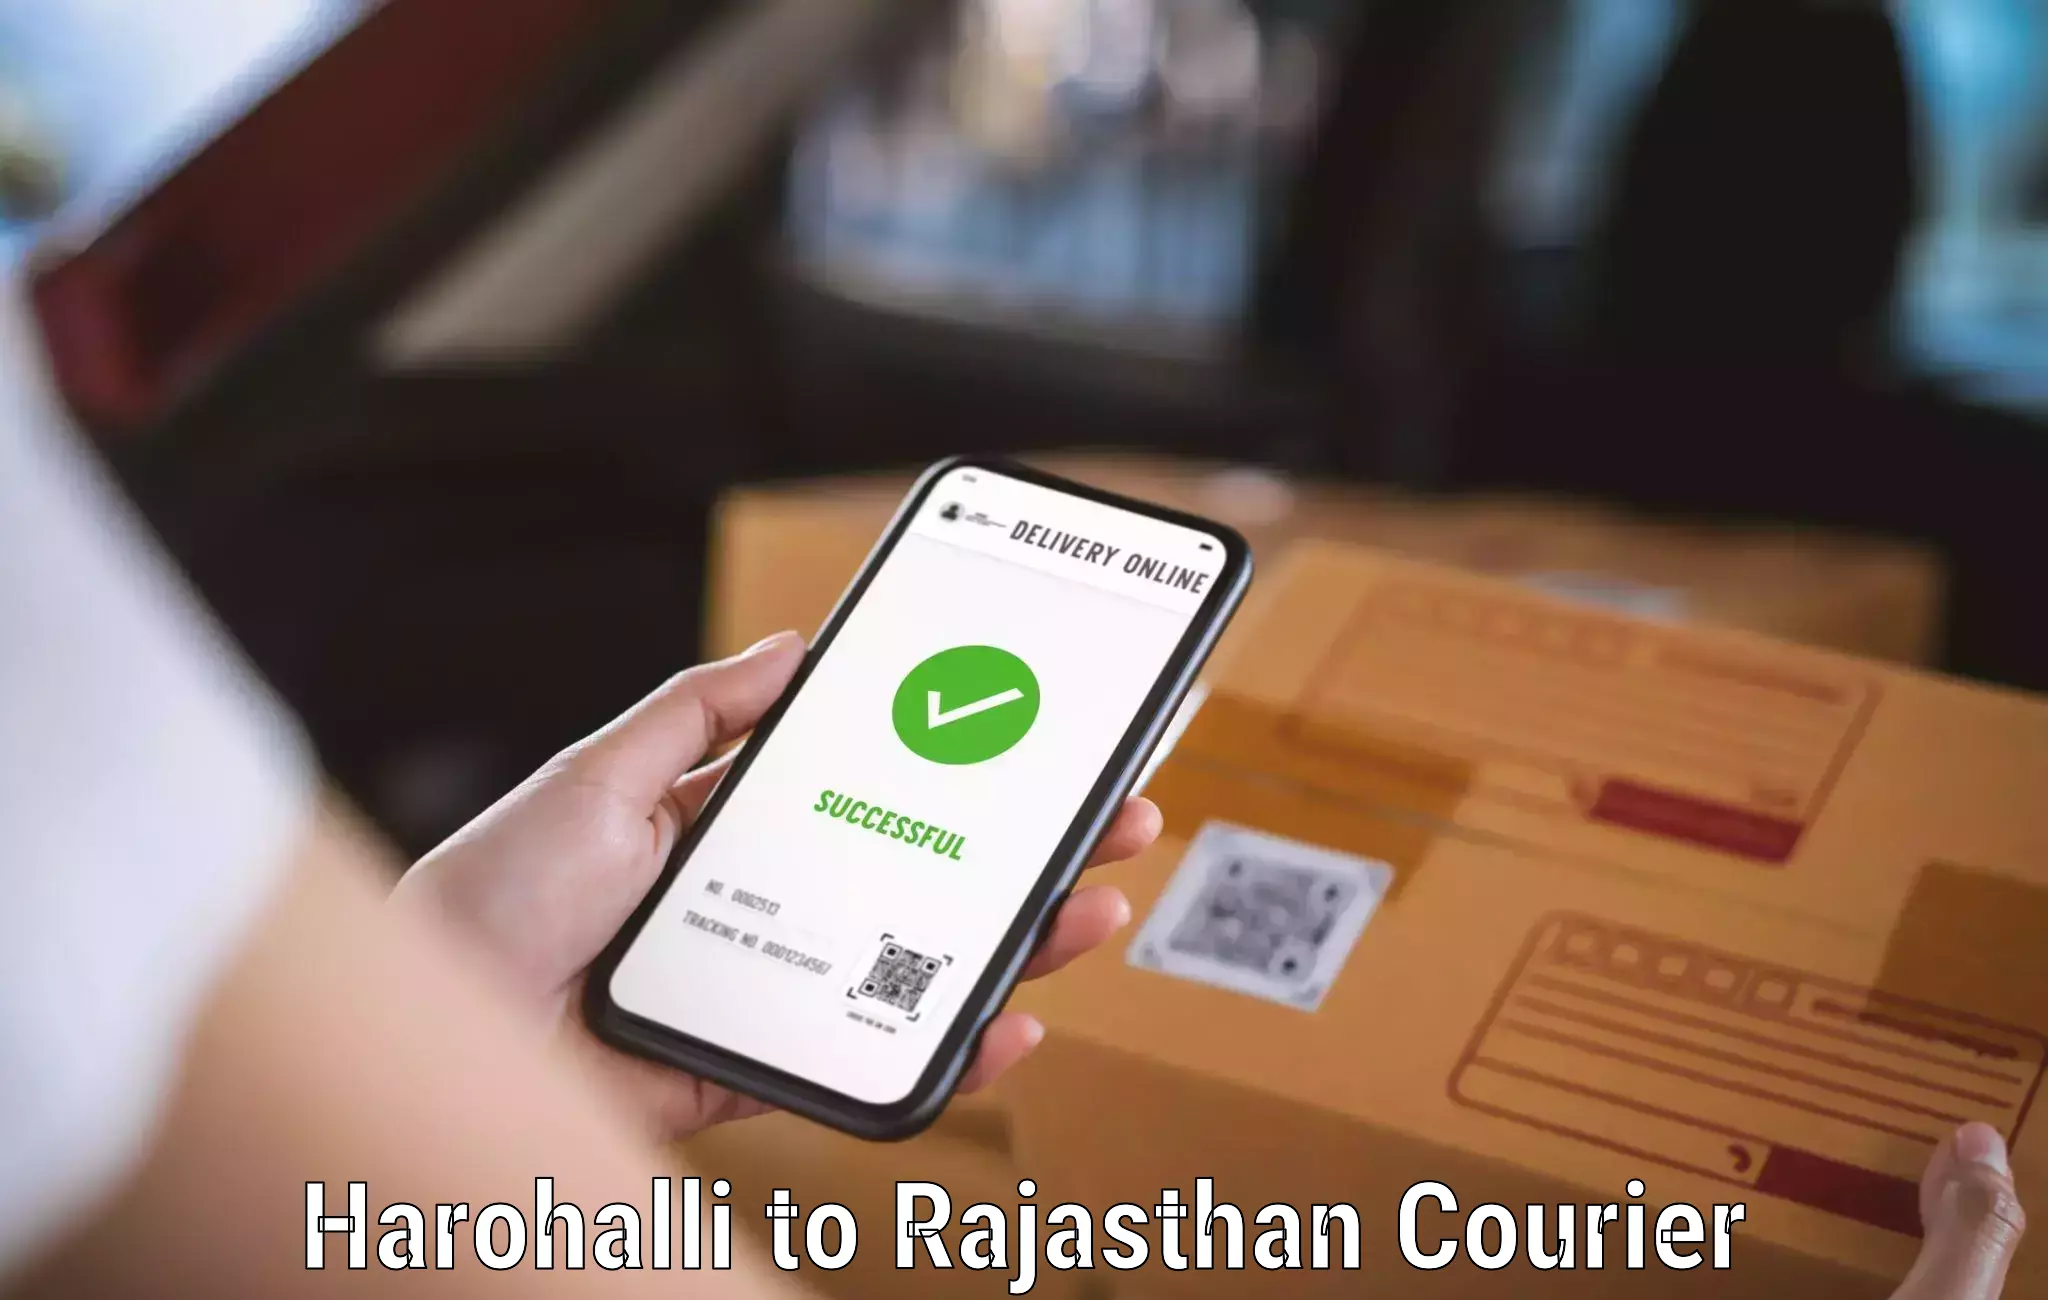 24/7 courier service Harohalli to Jaipur